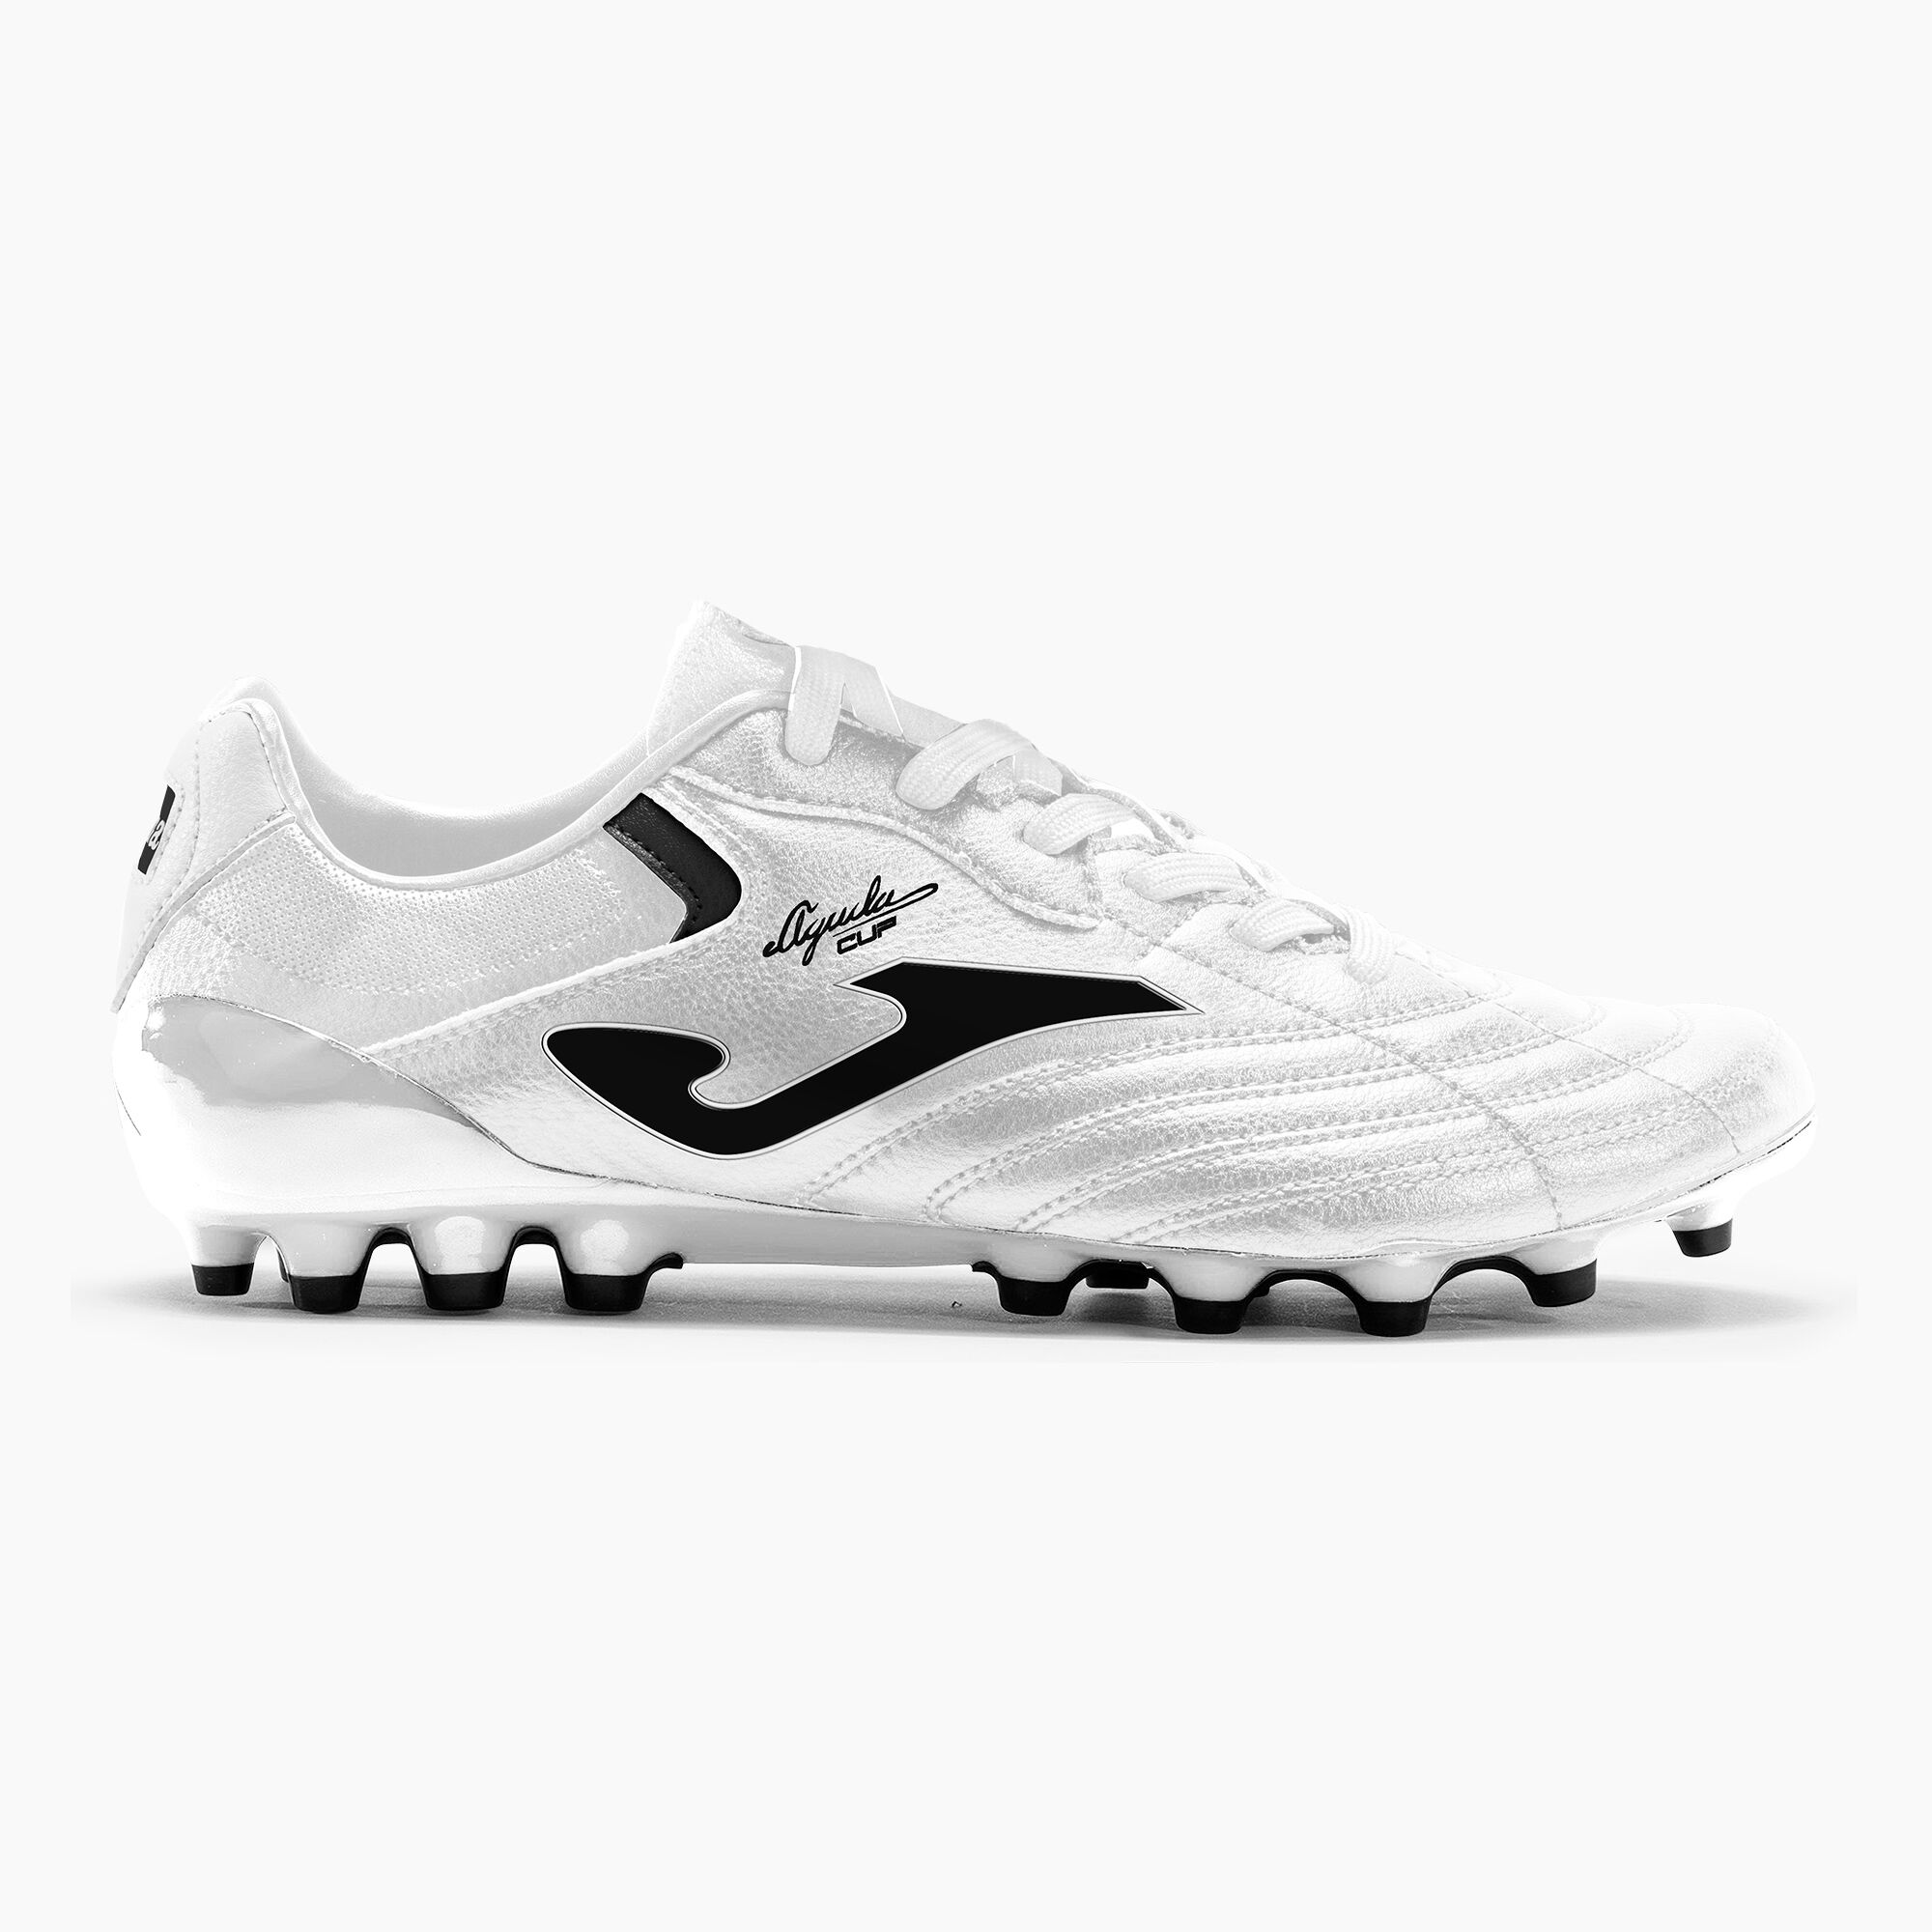 Chaussures football Aguila Cup 24 gazon synthétique AG blanc noir